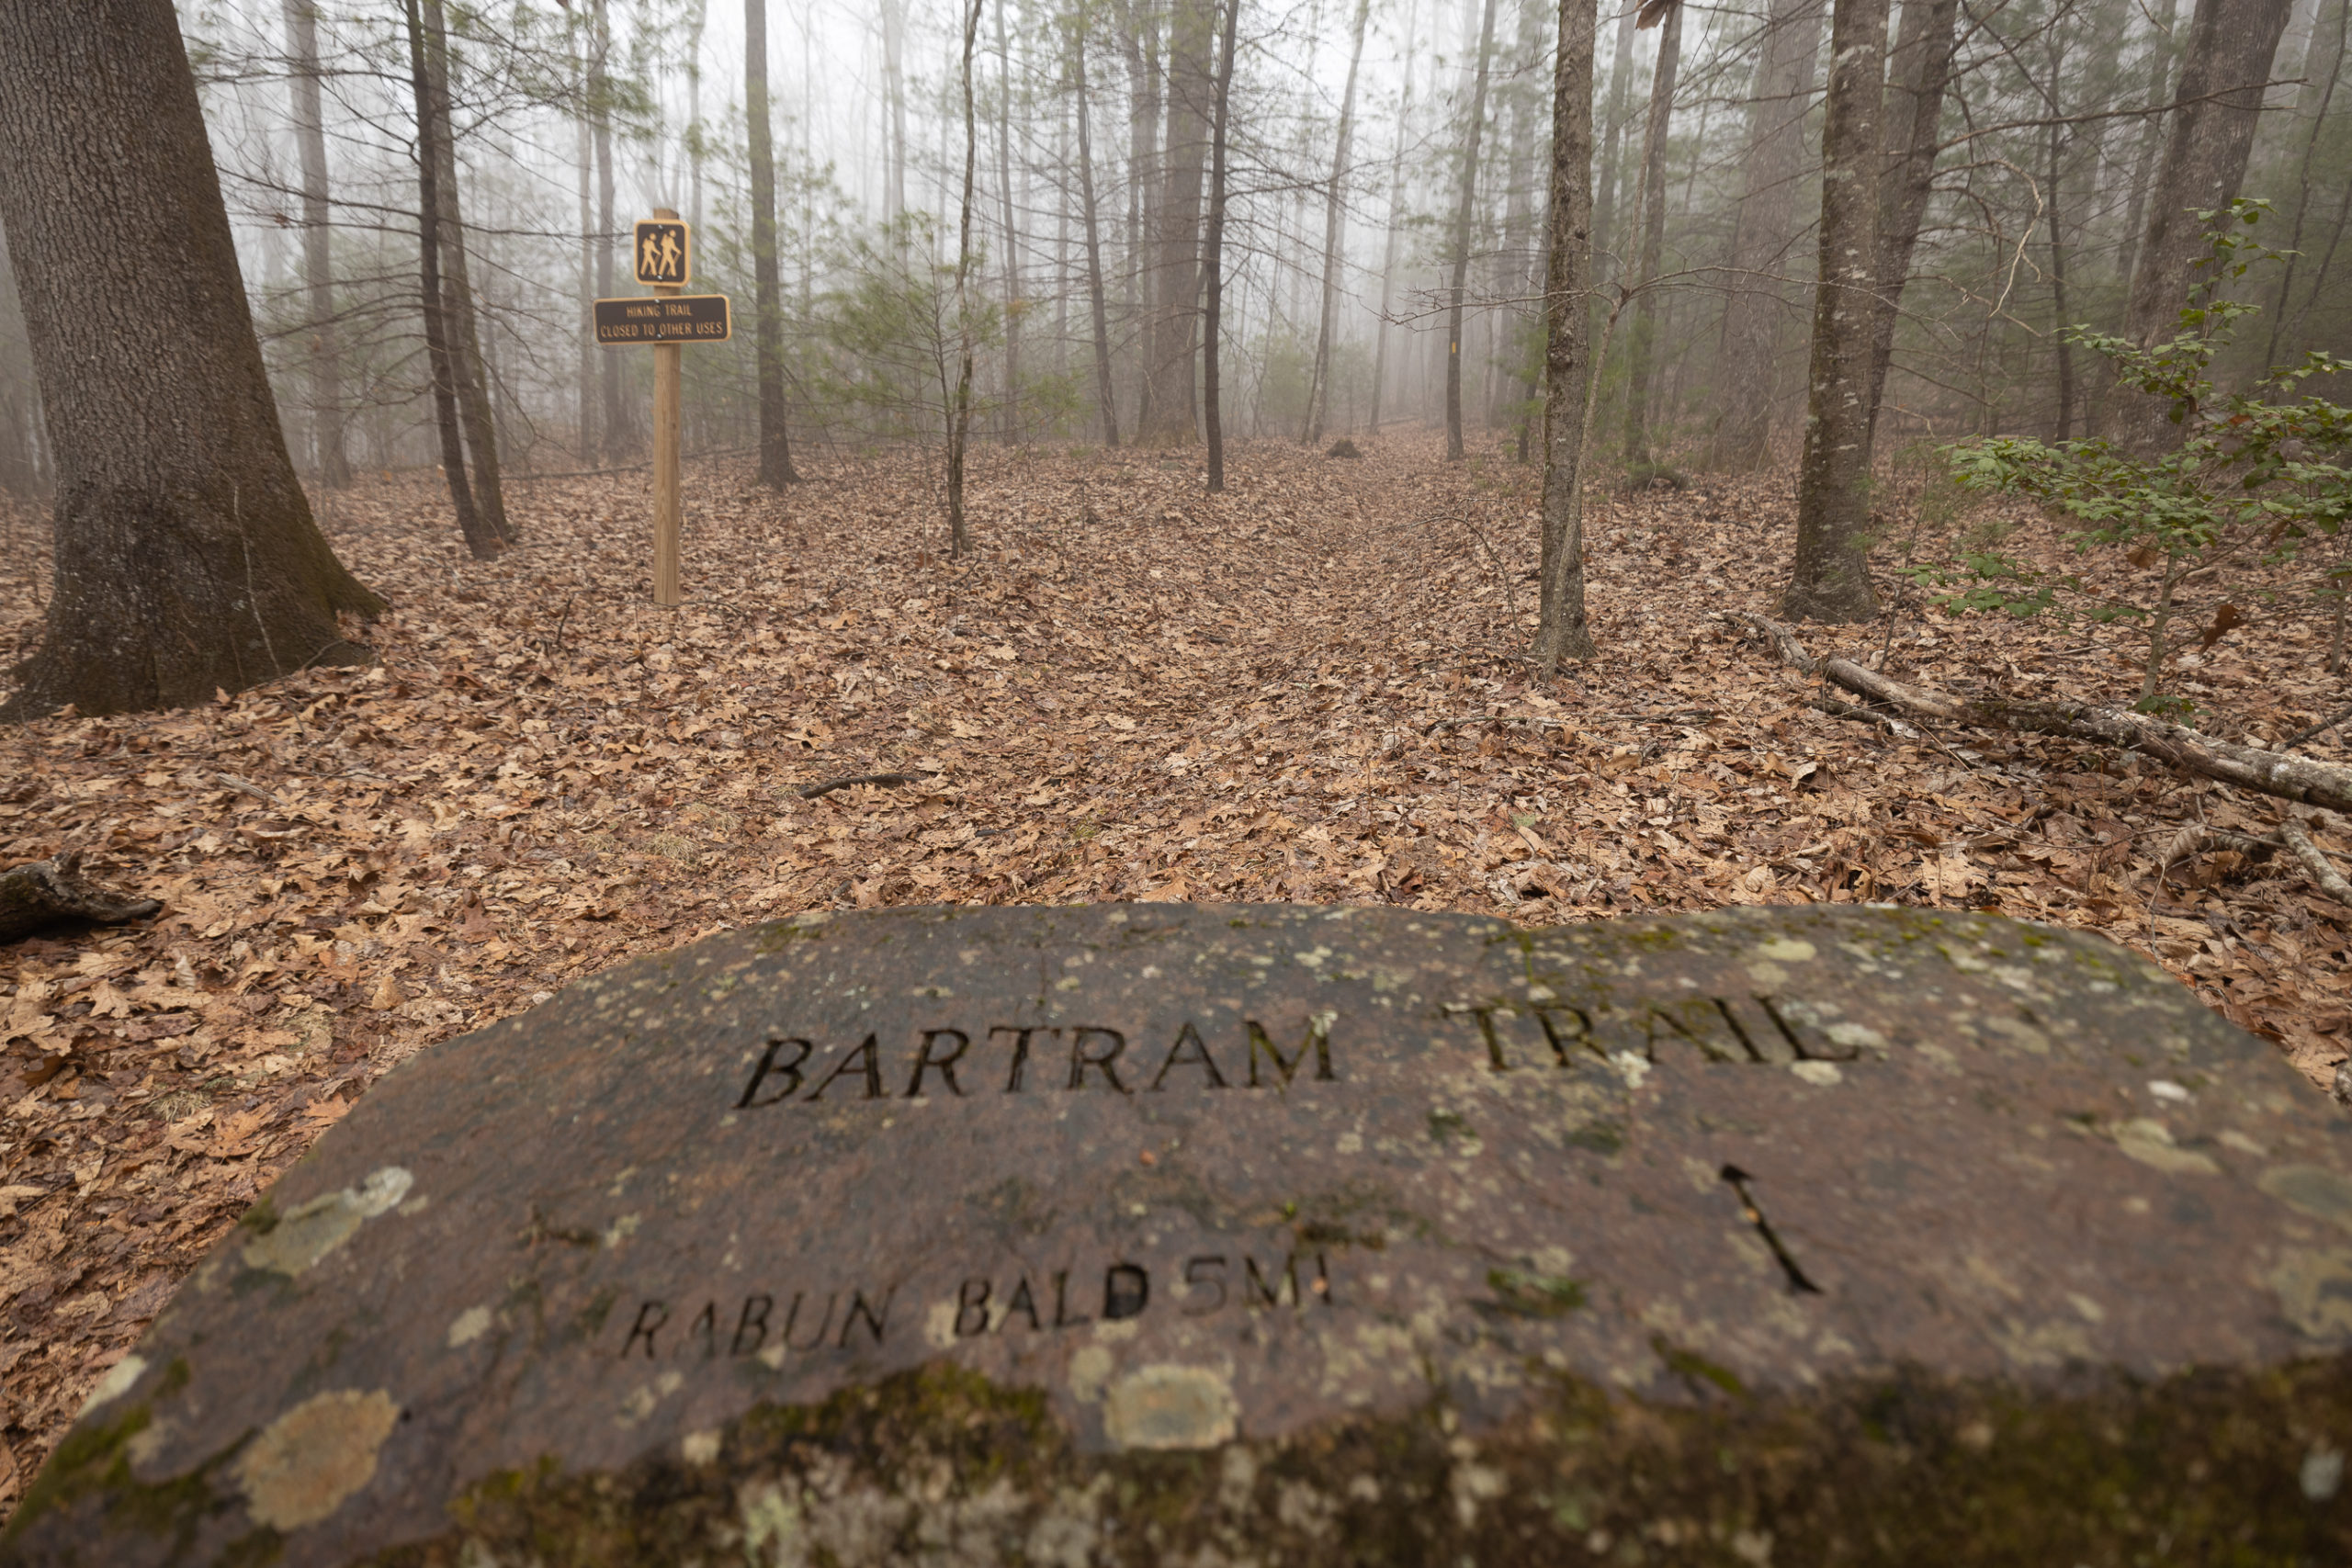 Bartram Trail stone marker at Wilson Gap